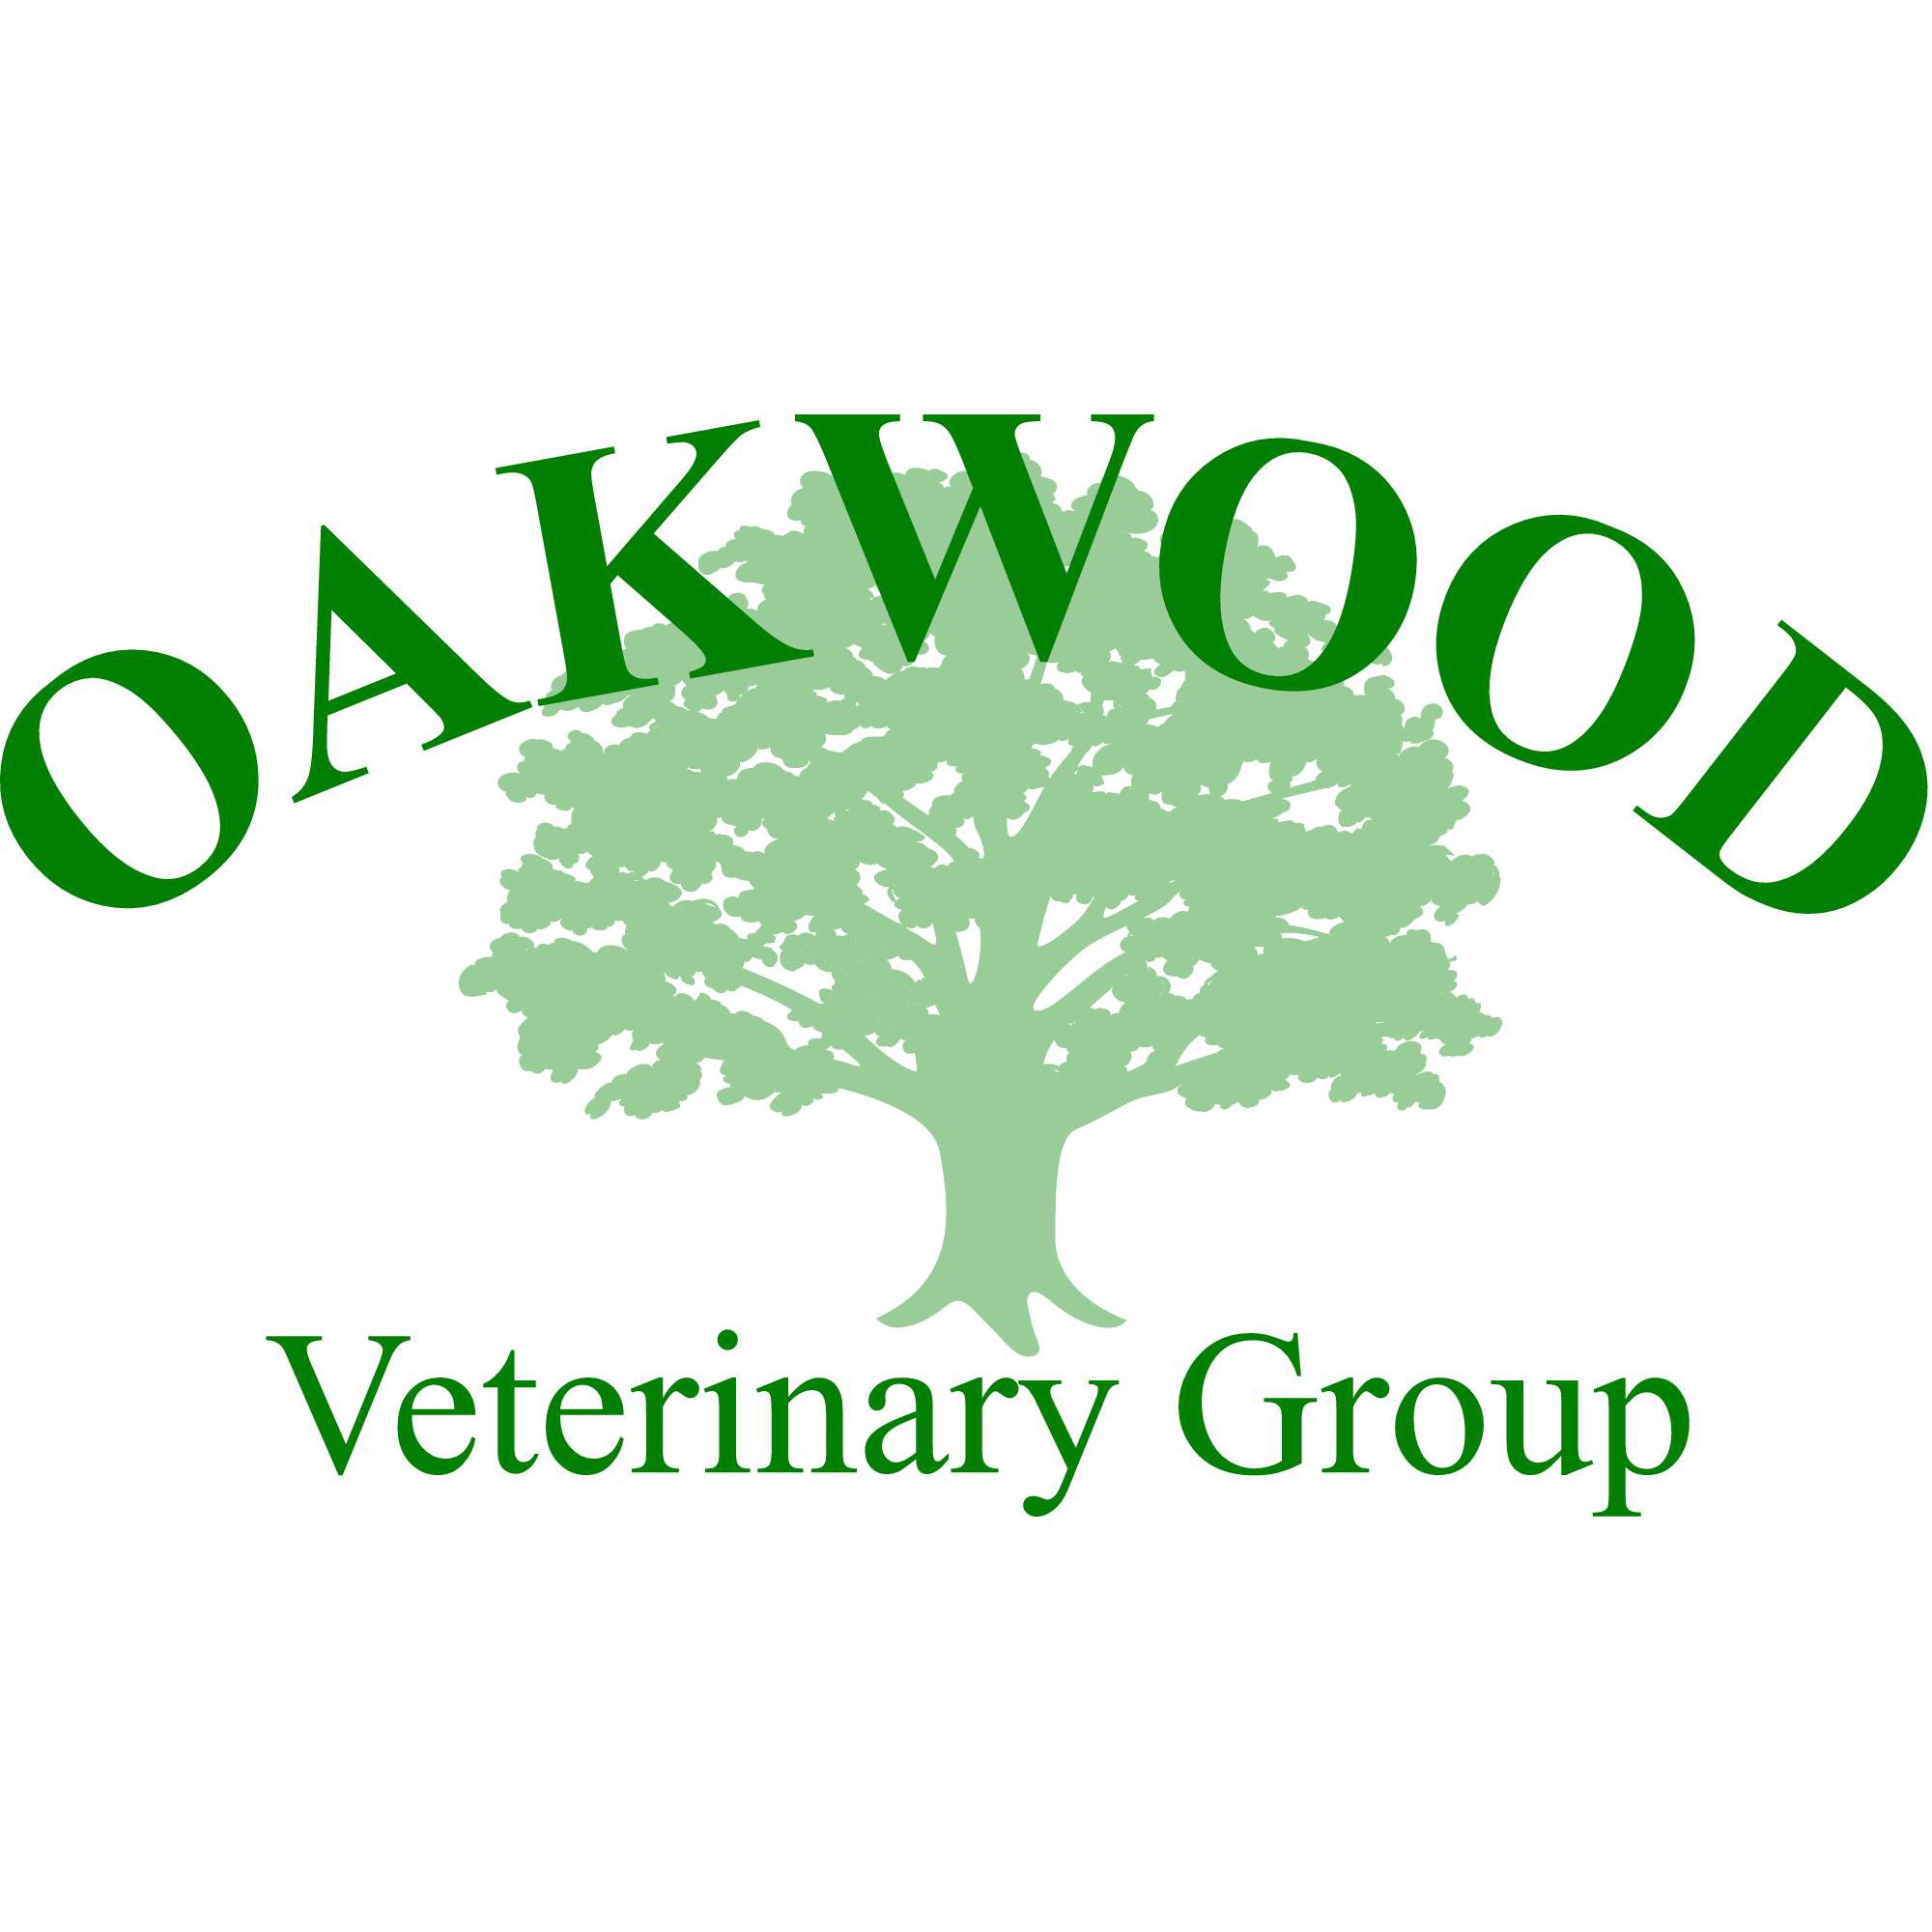 The Oakwood Veterinary Group, Harleston Harleston 01379 852146